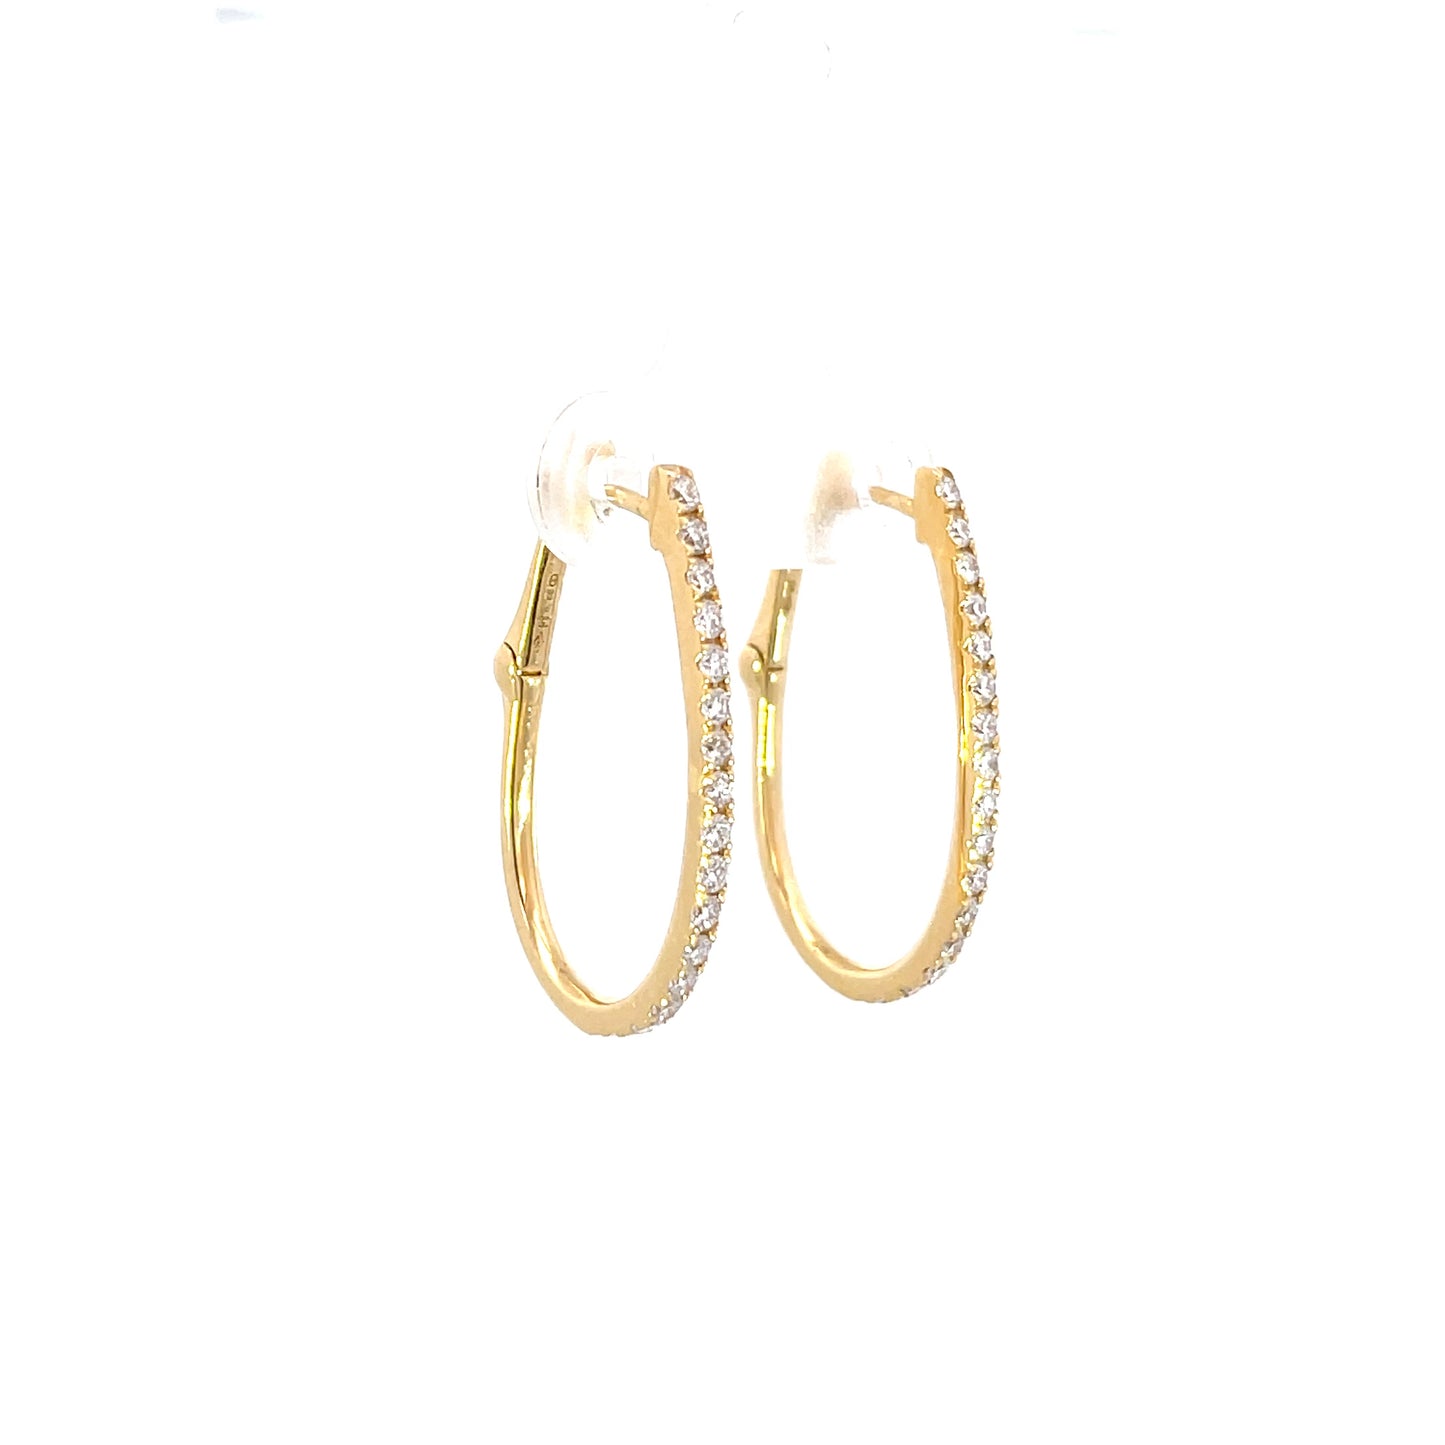 Diamond 18 kt yellow gold earring hoops